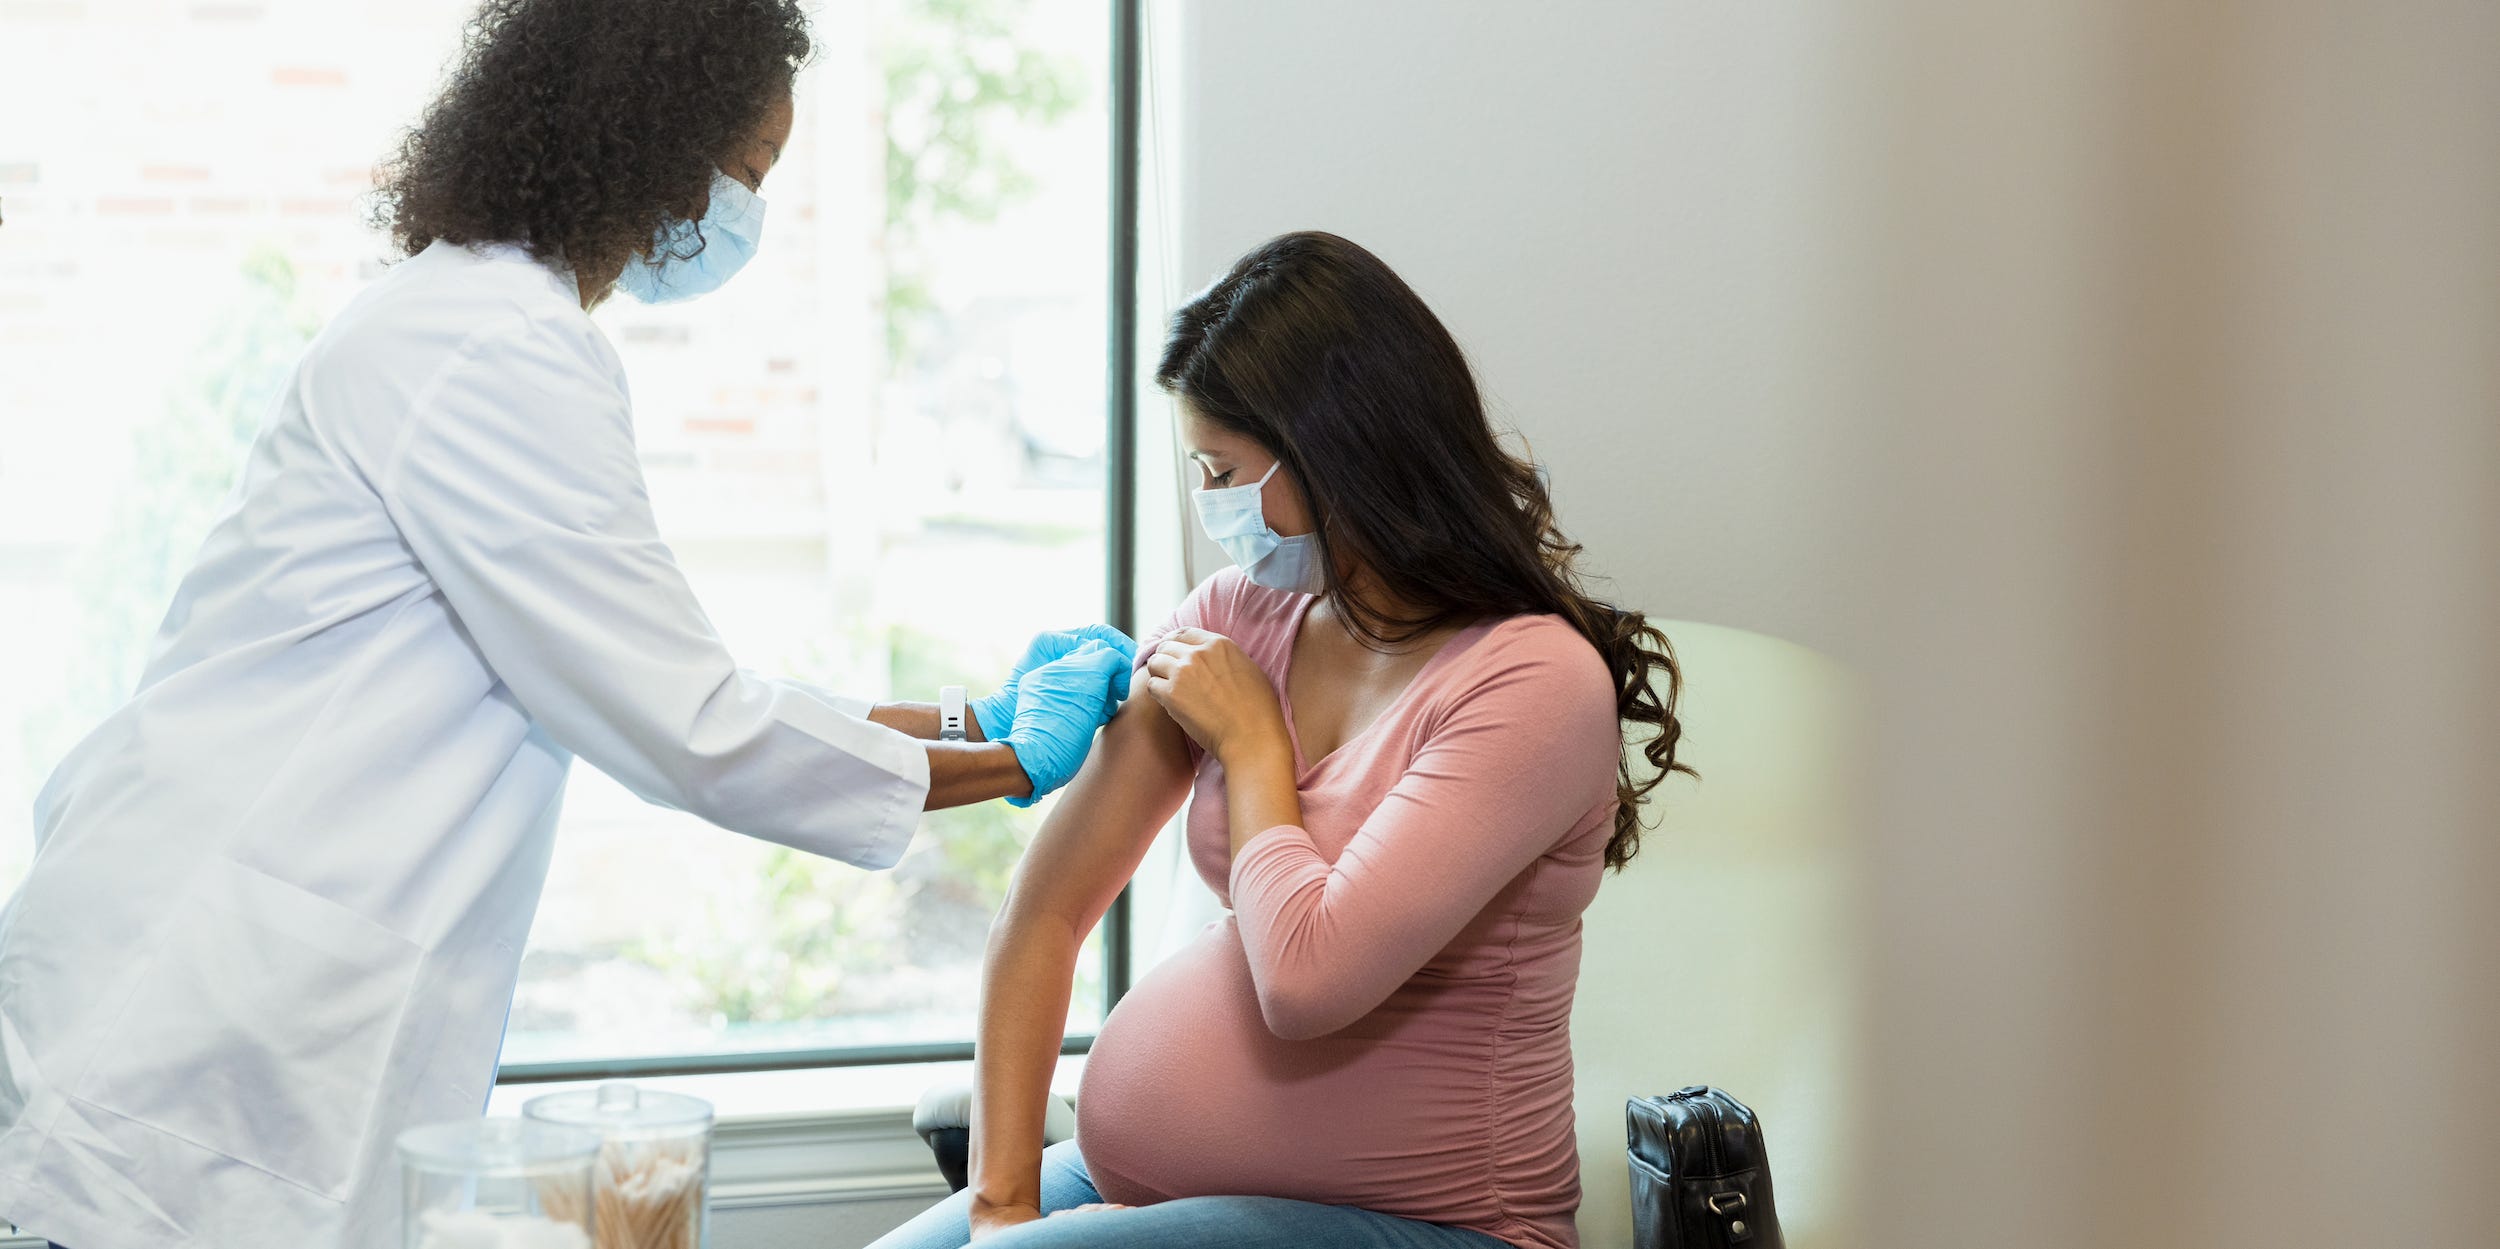 A pregnant woman receives a vaccine shot.